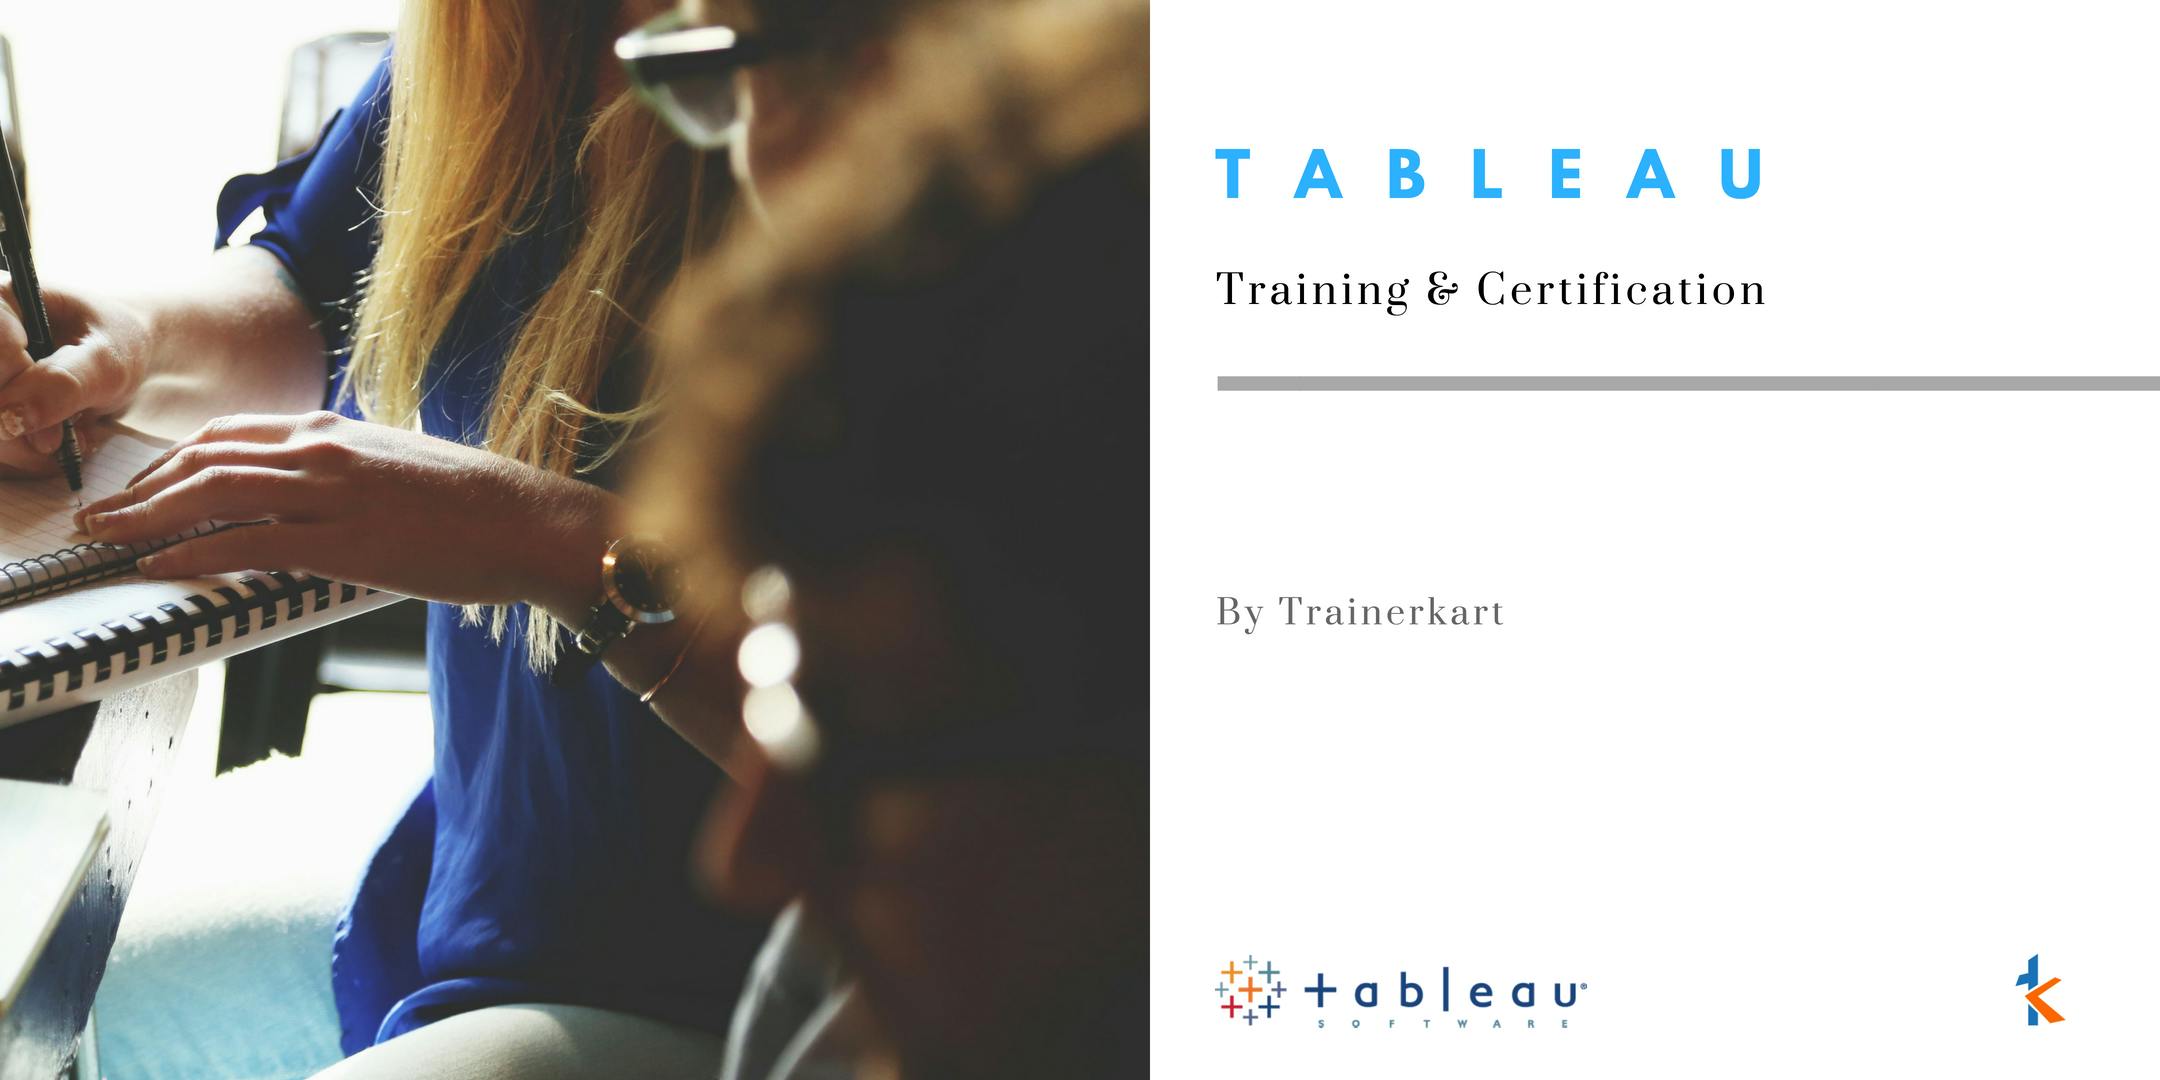 Tableau Training & Certification in Melbourne, FL